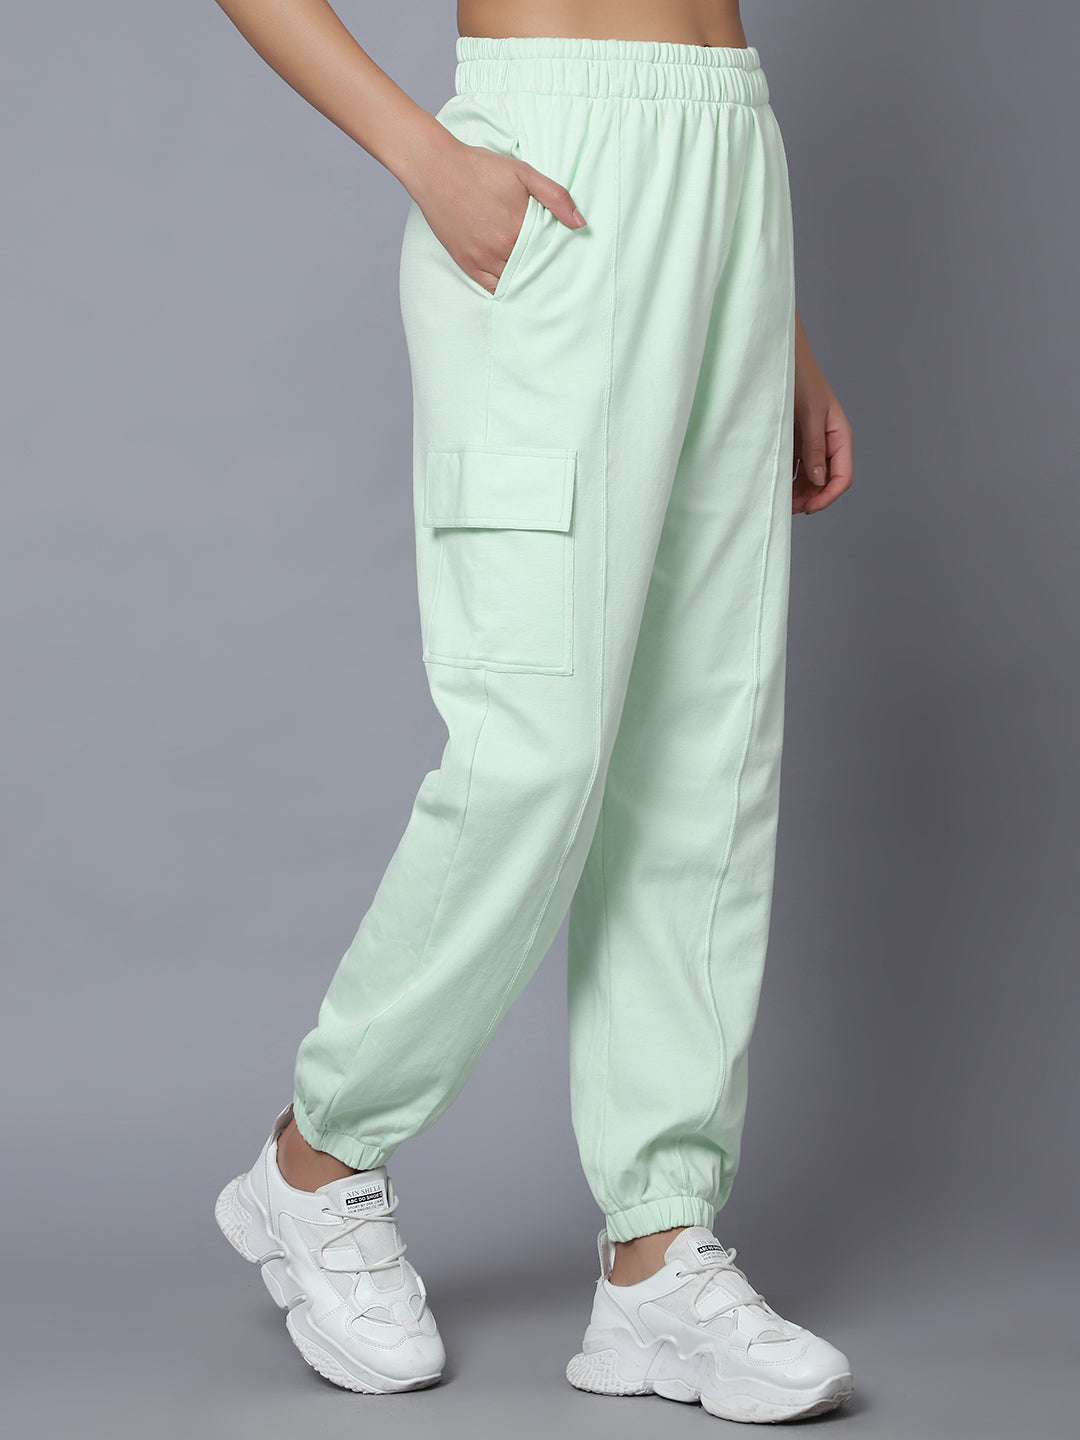 Womens Lime Green Pants | ShopStyle UK